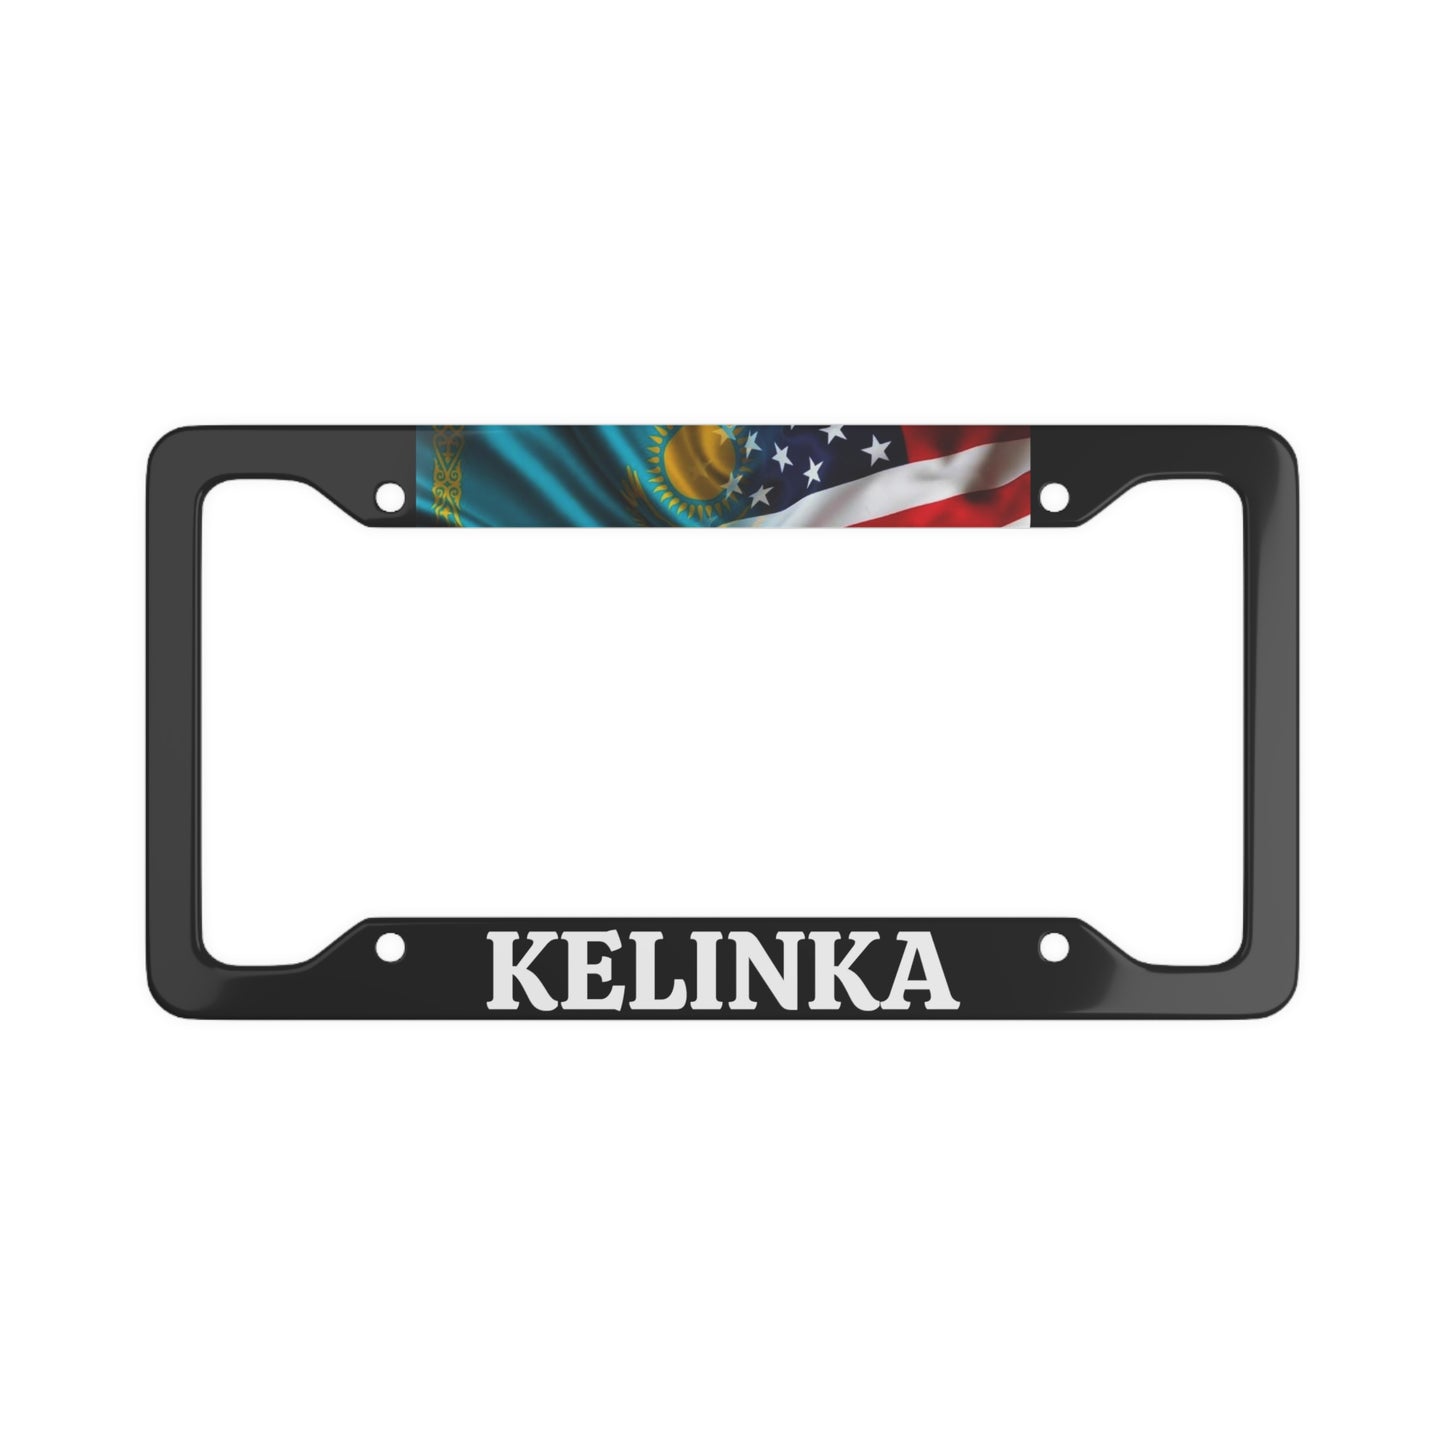 KELINKA with flag License Plate Frame